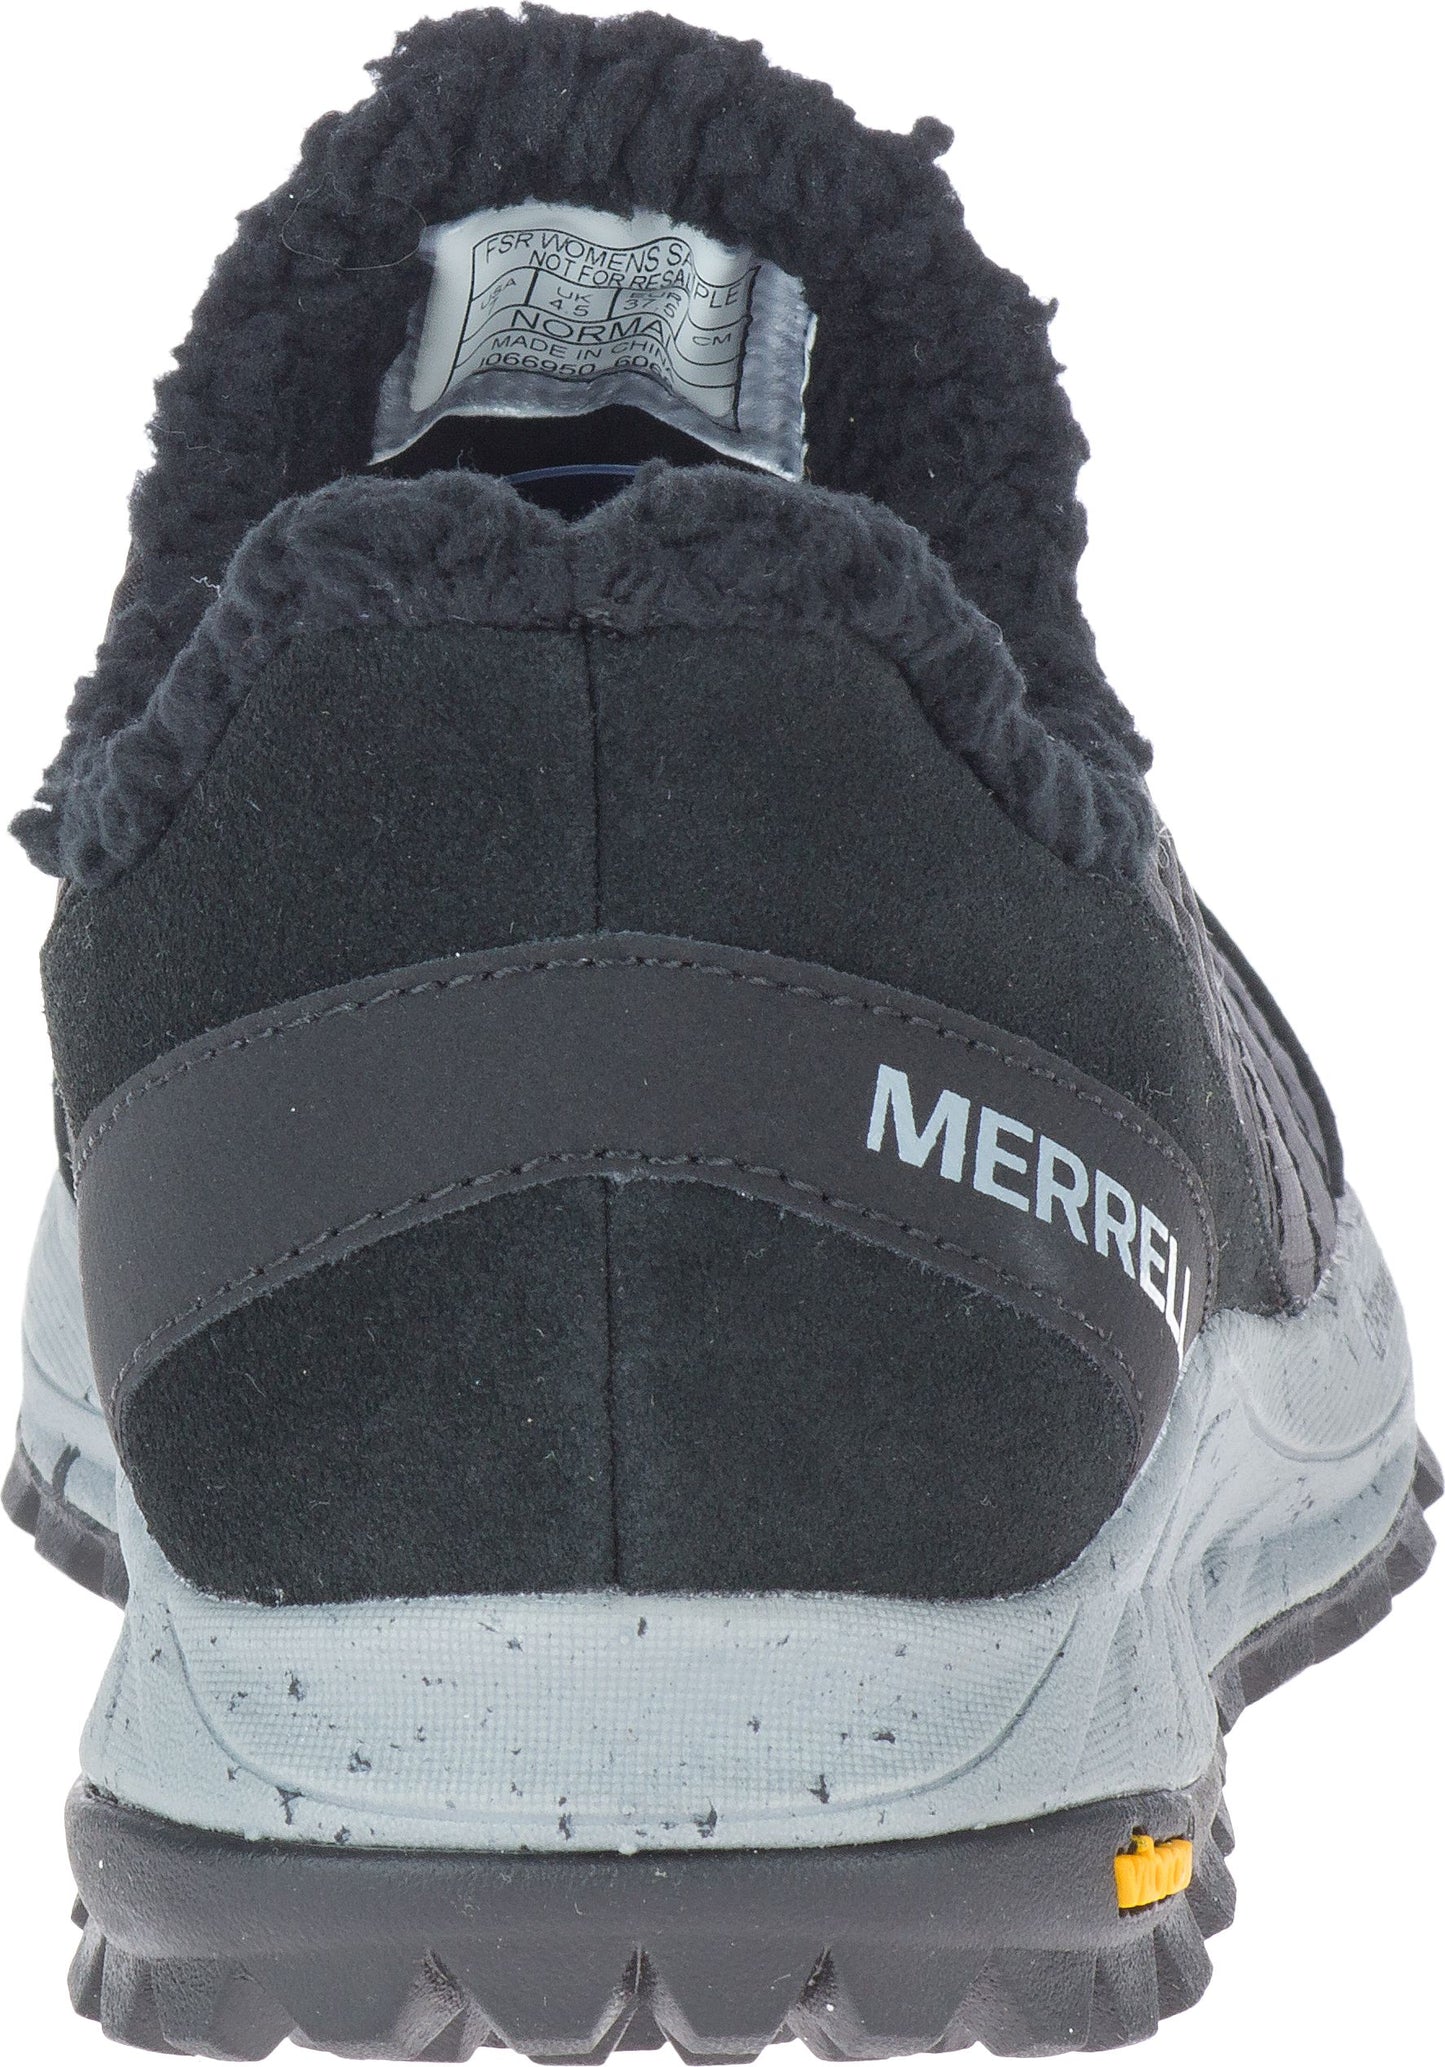 Merrell Boots Antora Sneaker Moc Black